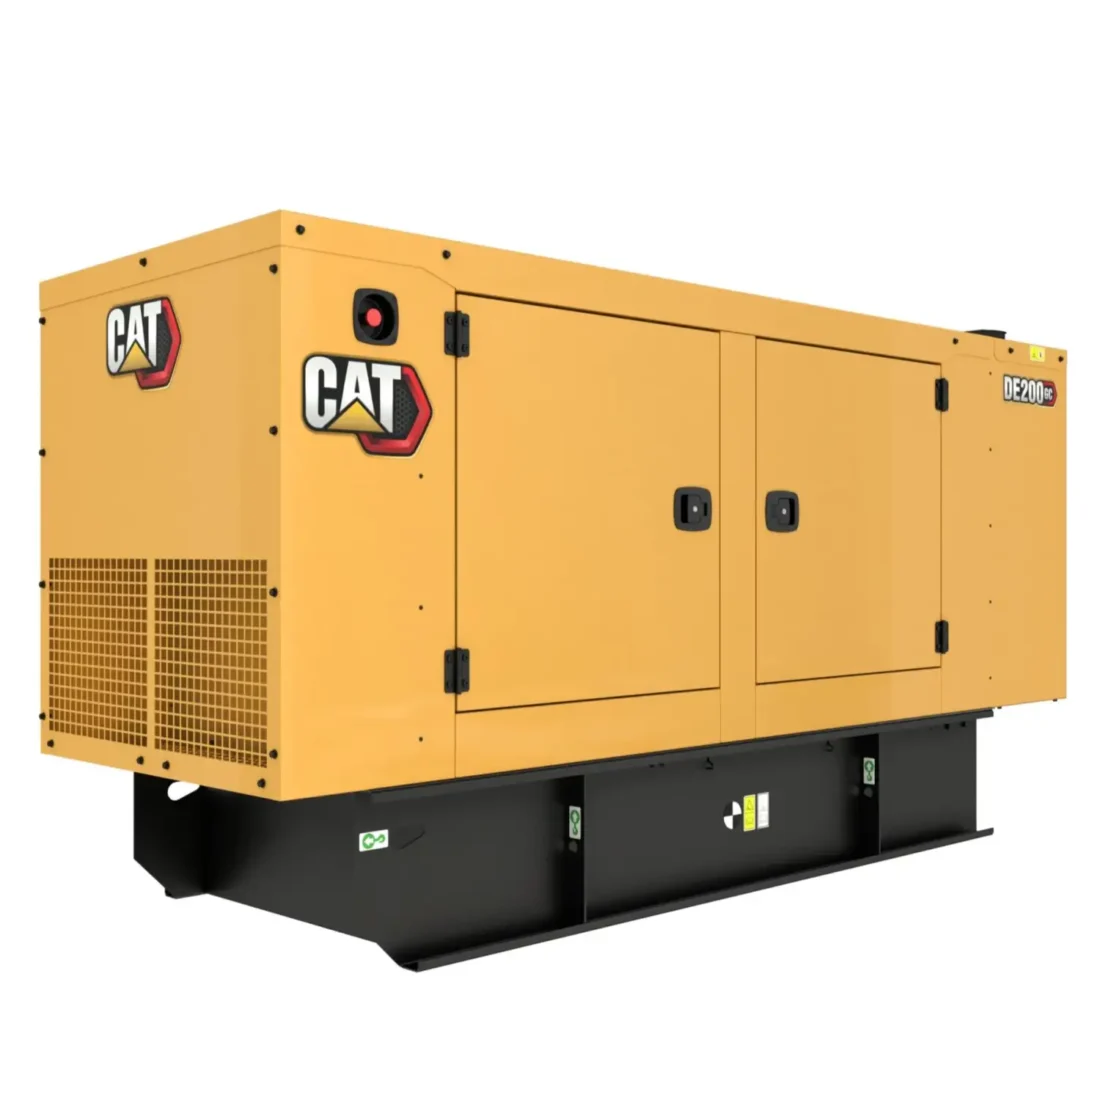 CAT DE200 GC 200kVA Diesel Generator